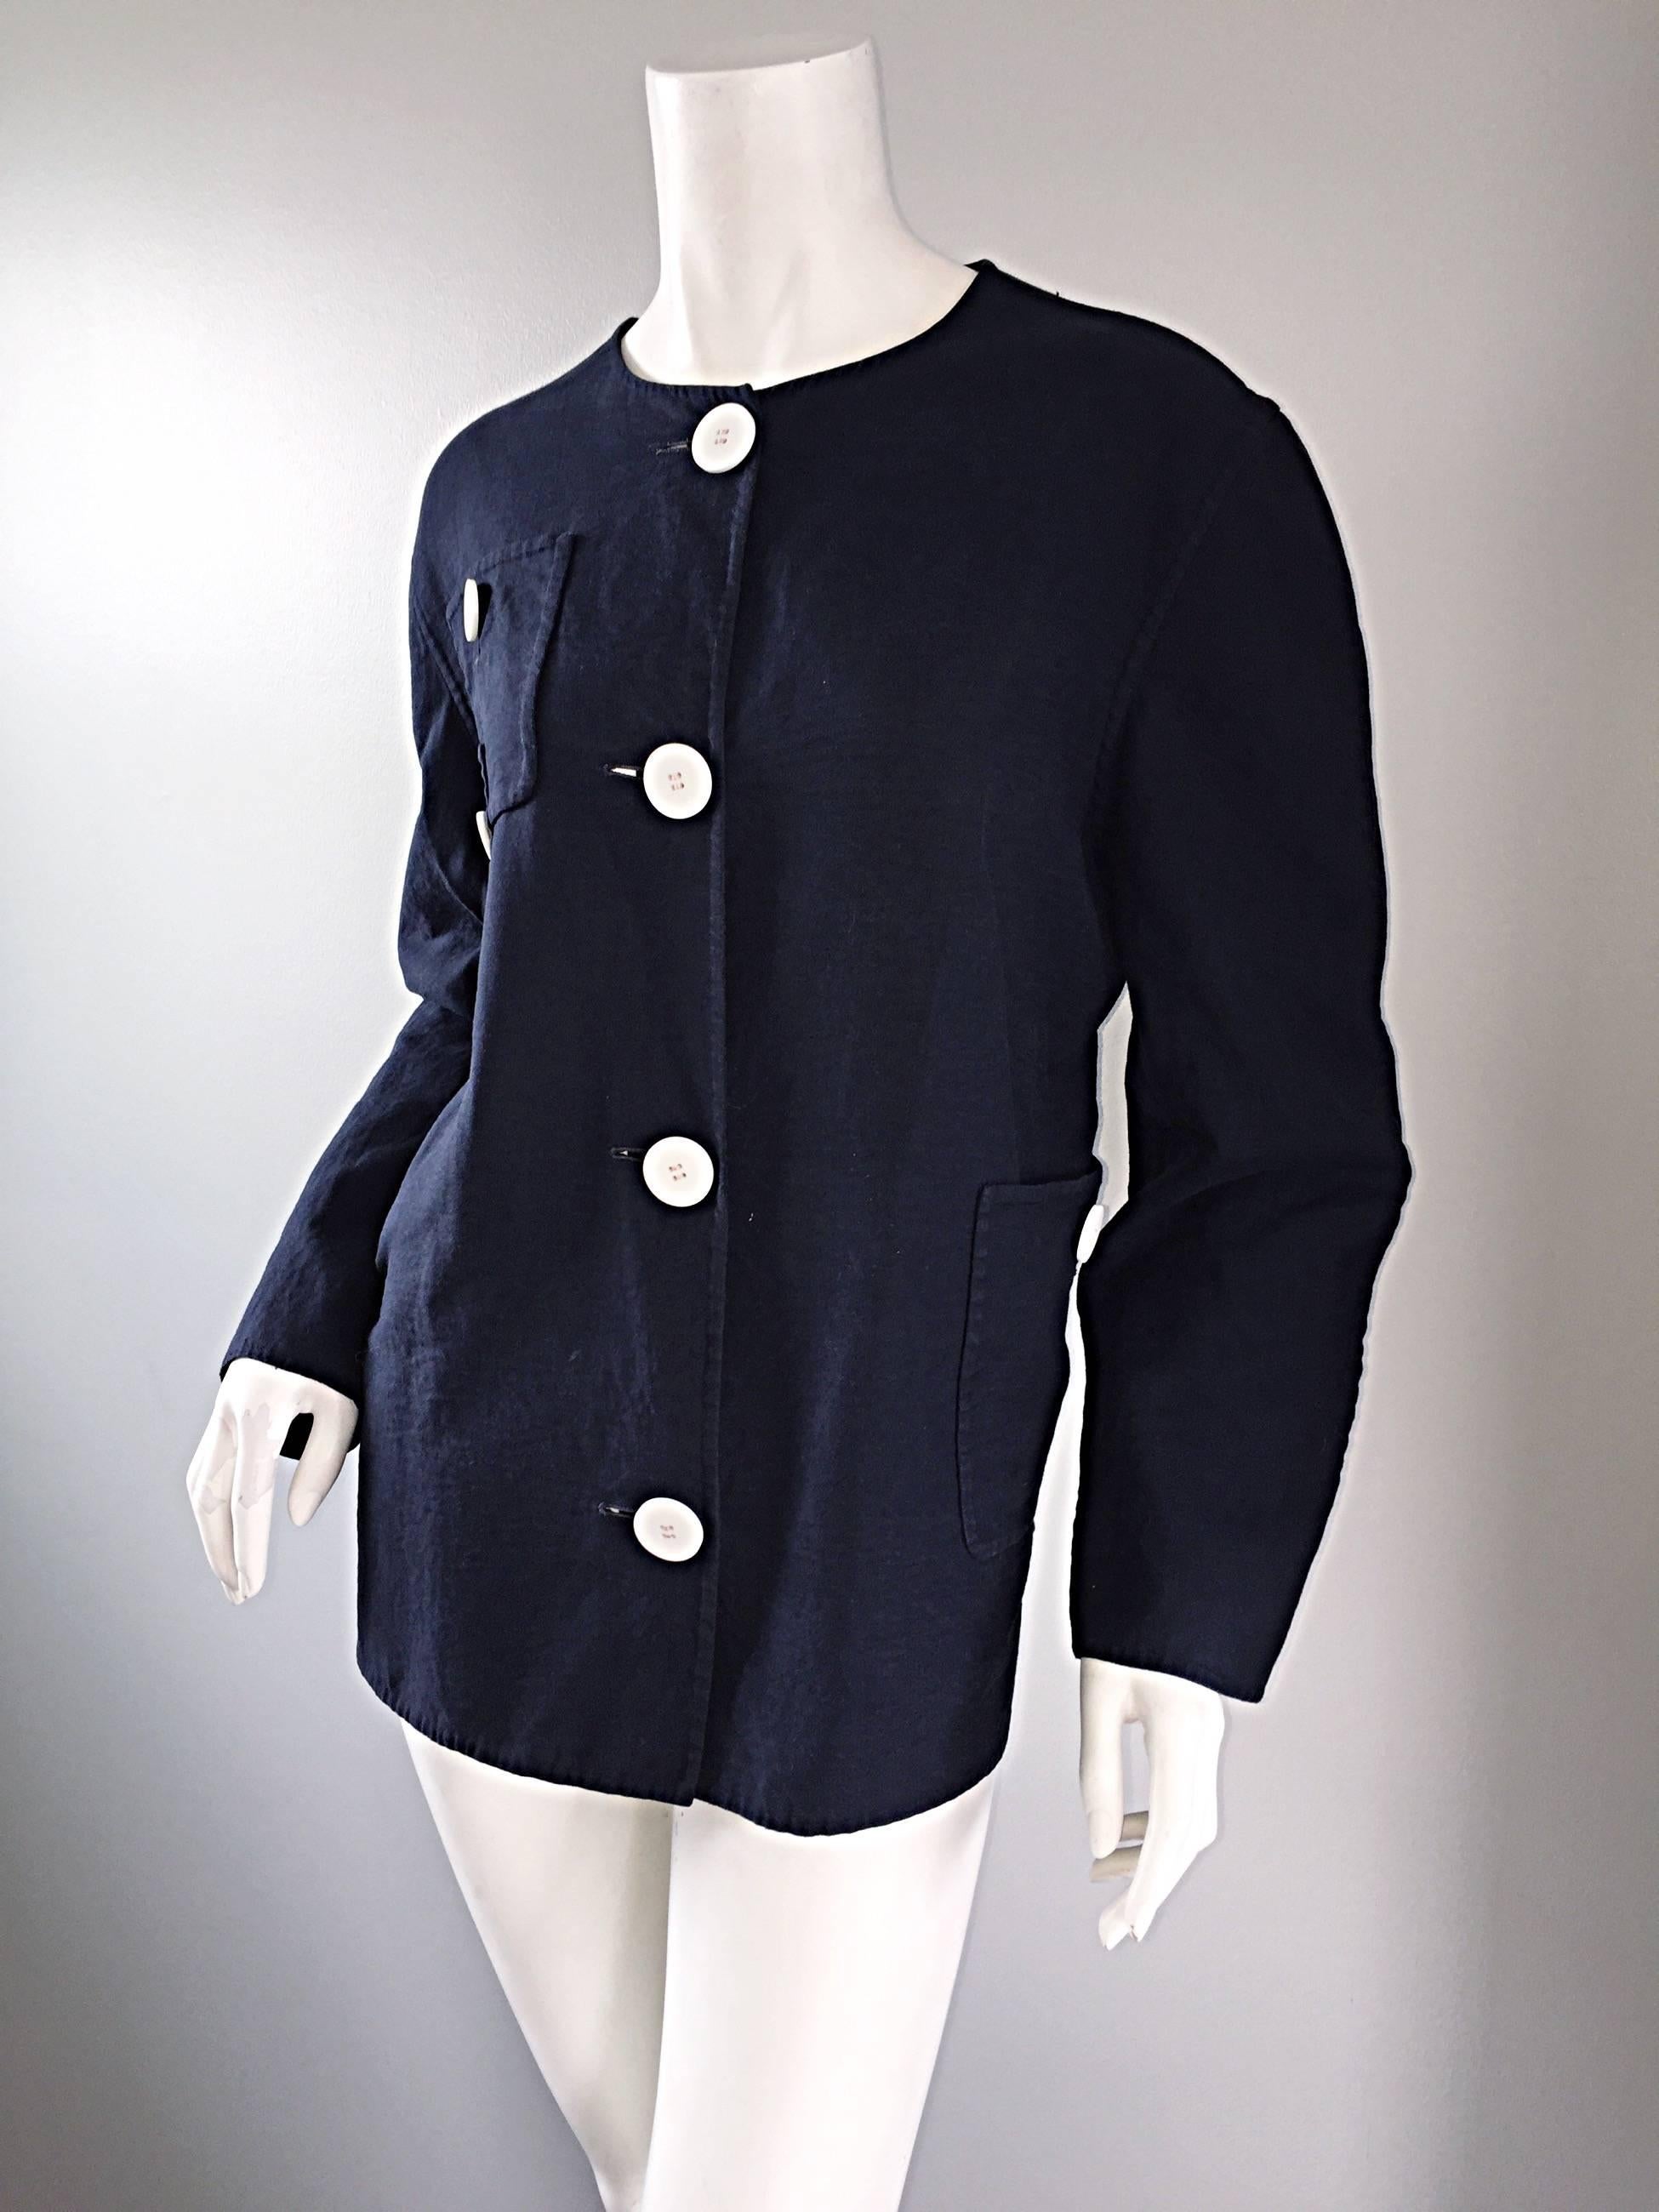 Black 1960s Bill Blass for Bergdorf Goodman Navy Blue + White Nautical Swing Jacket